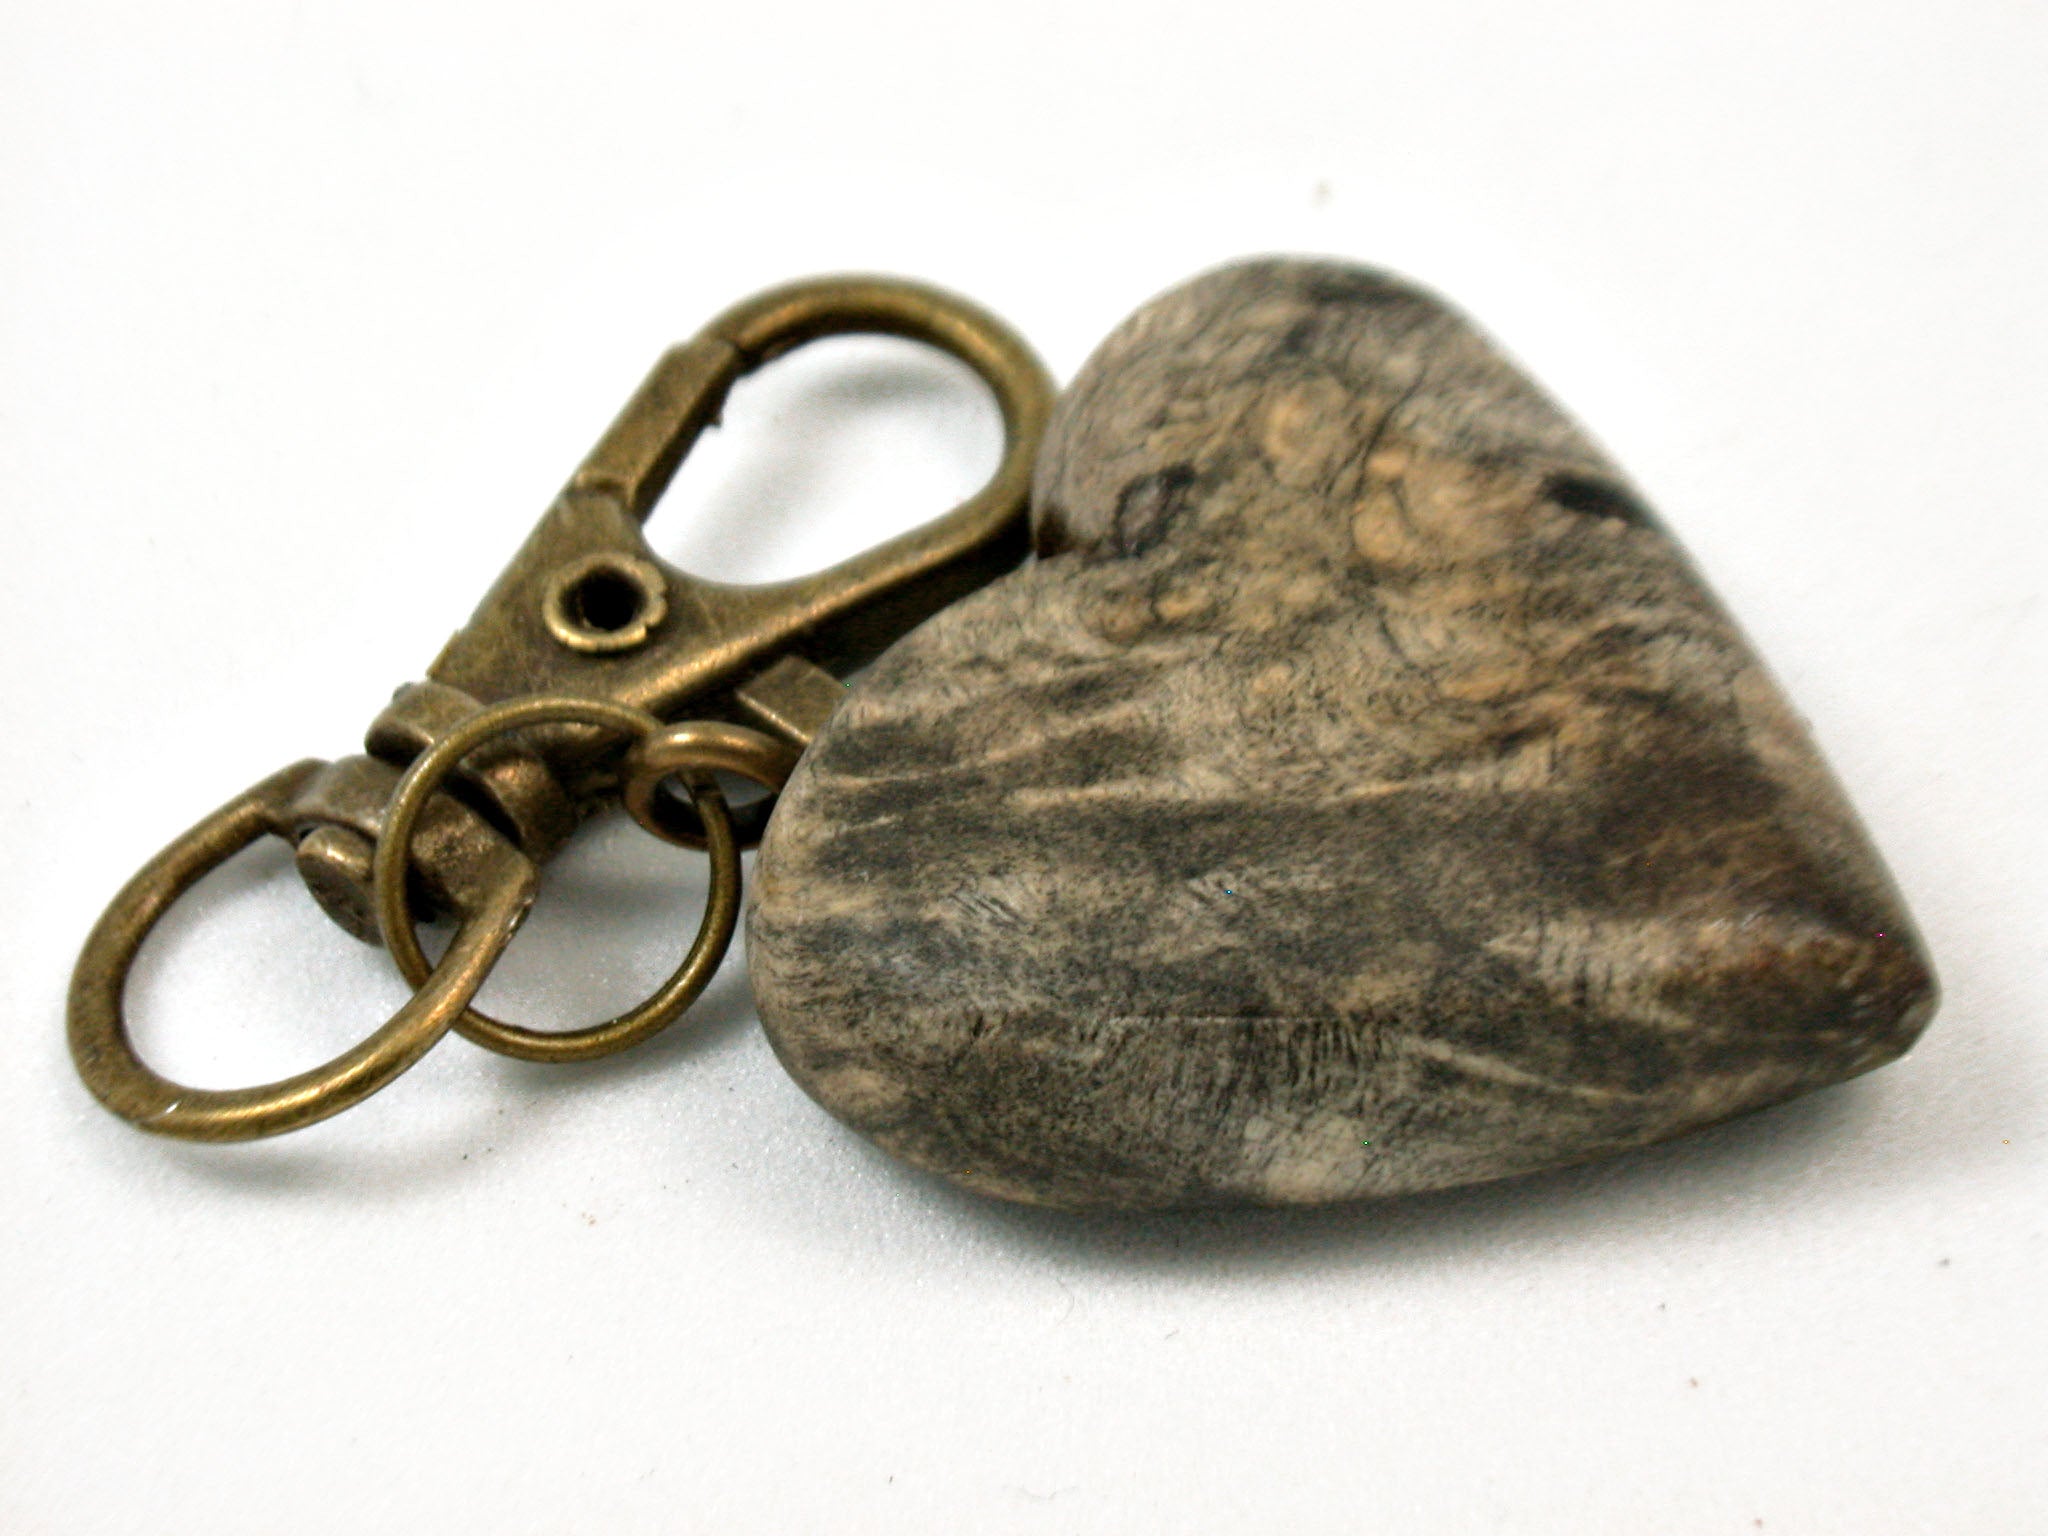 LV-3707 California Buckeye Burl Wooden Heart Shaped Charm, Keychain, Unique Hand Made